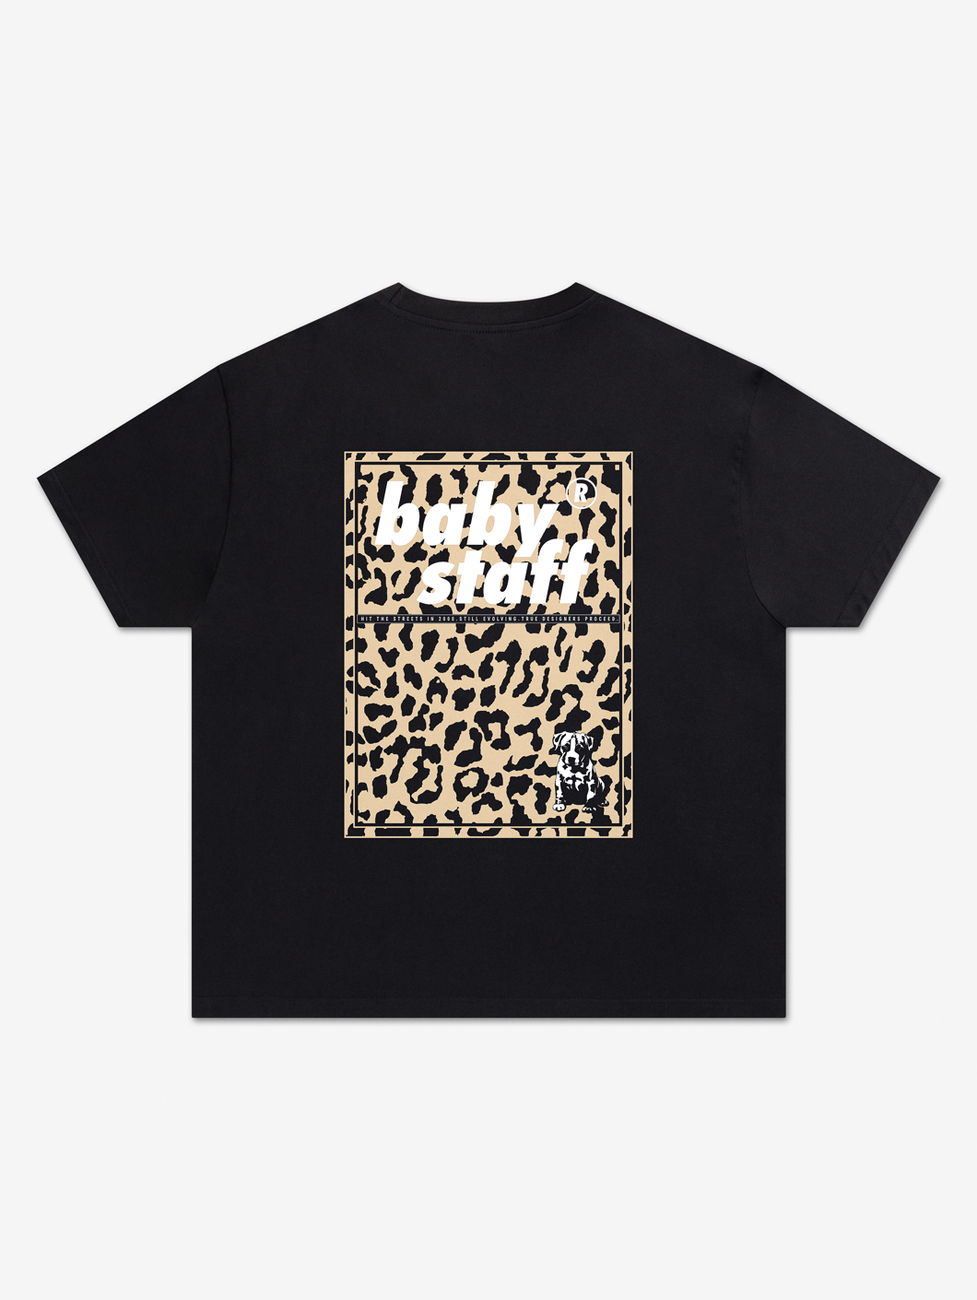 Babystaff Modai Oversize T-Shirt XL